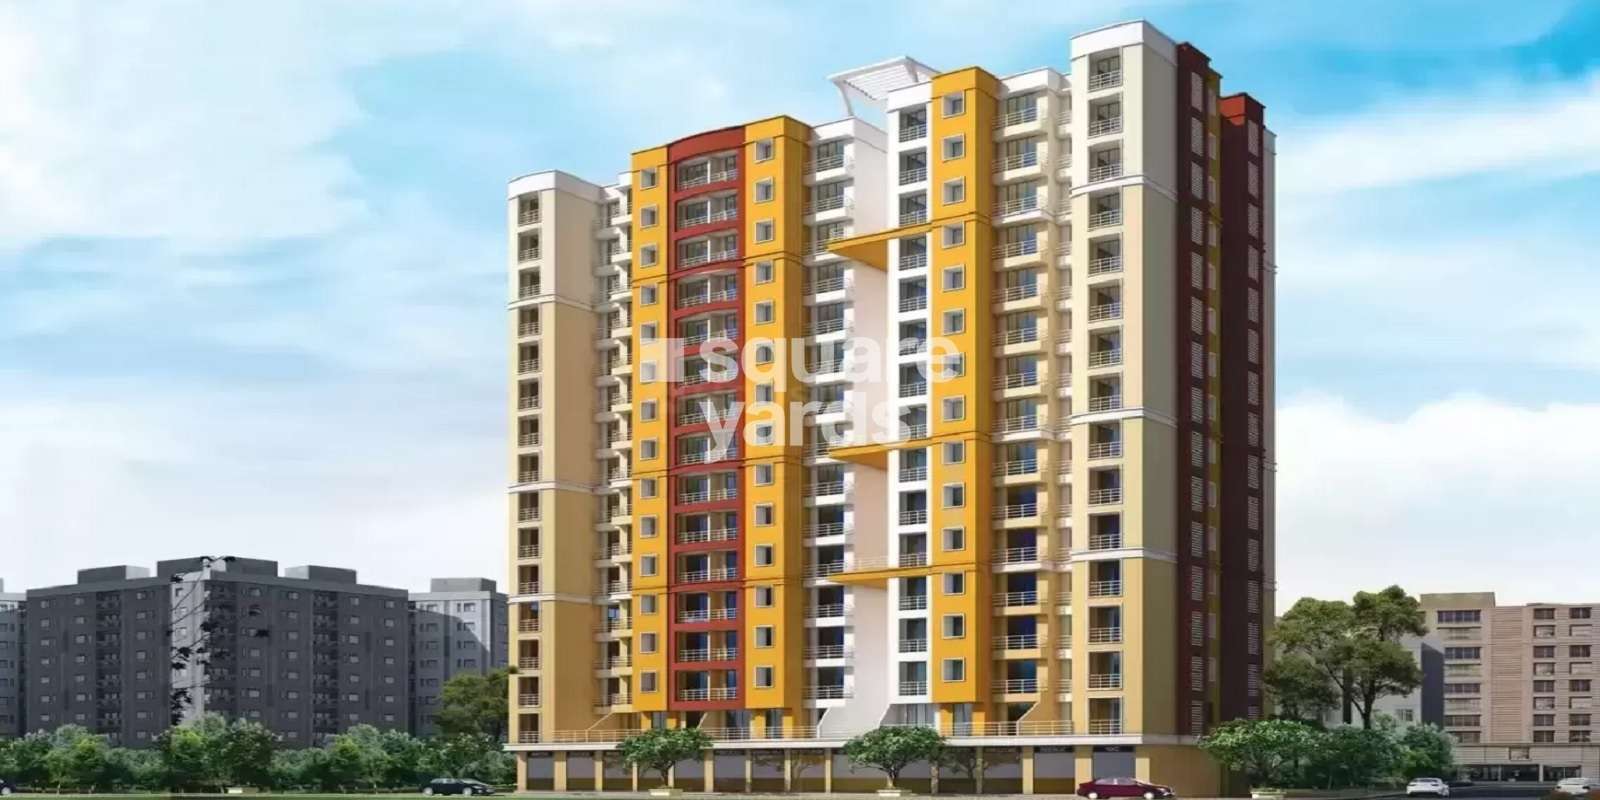 Ganesha Varija Apartment Cover Image